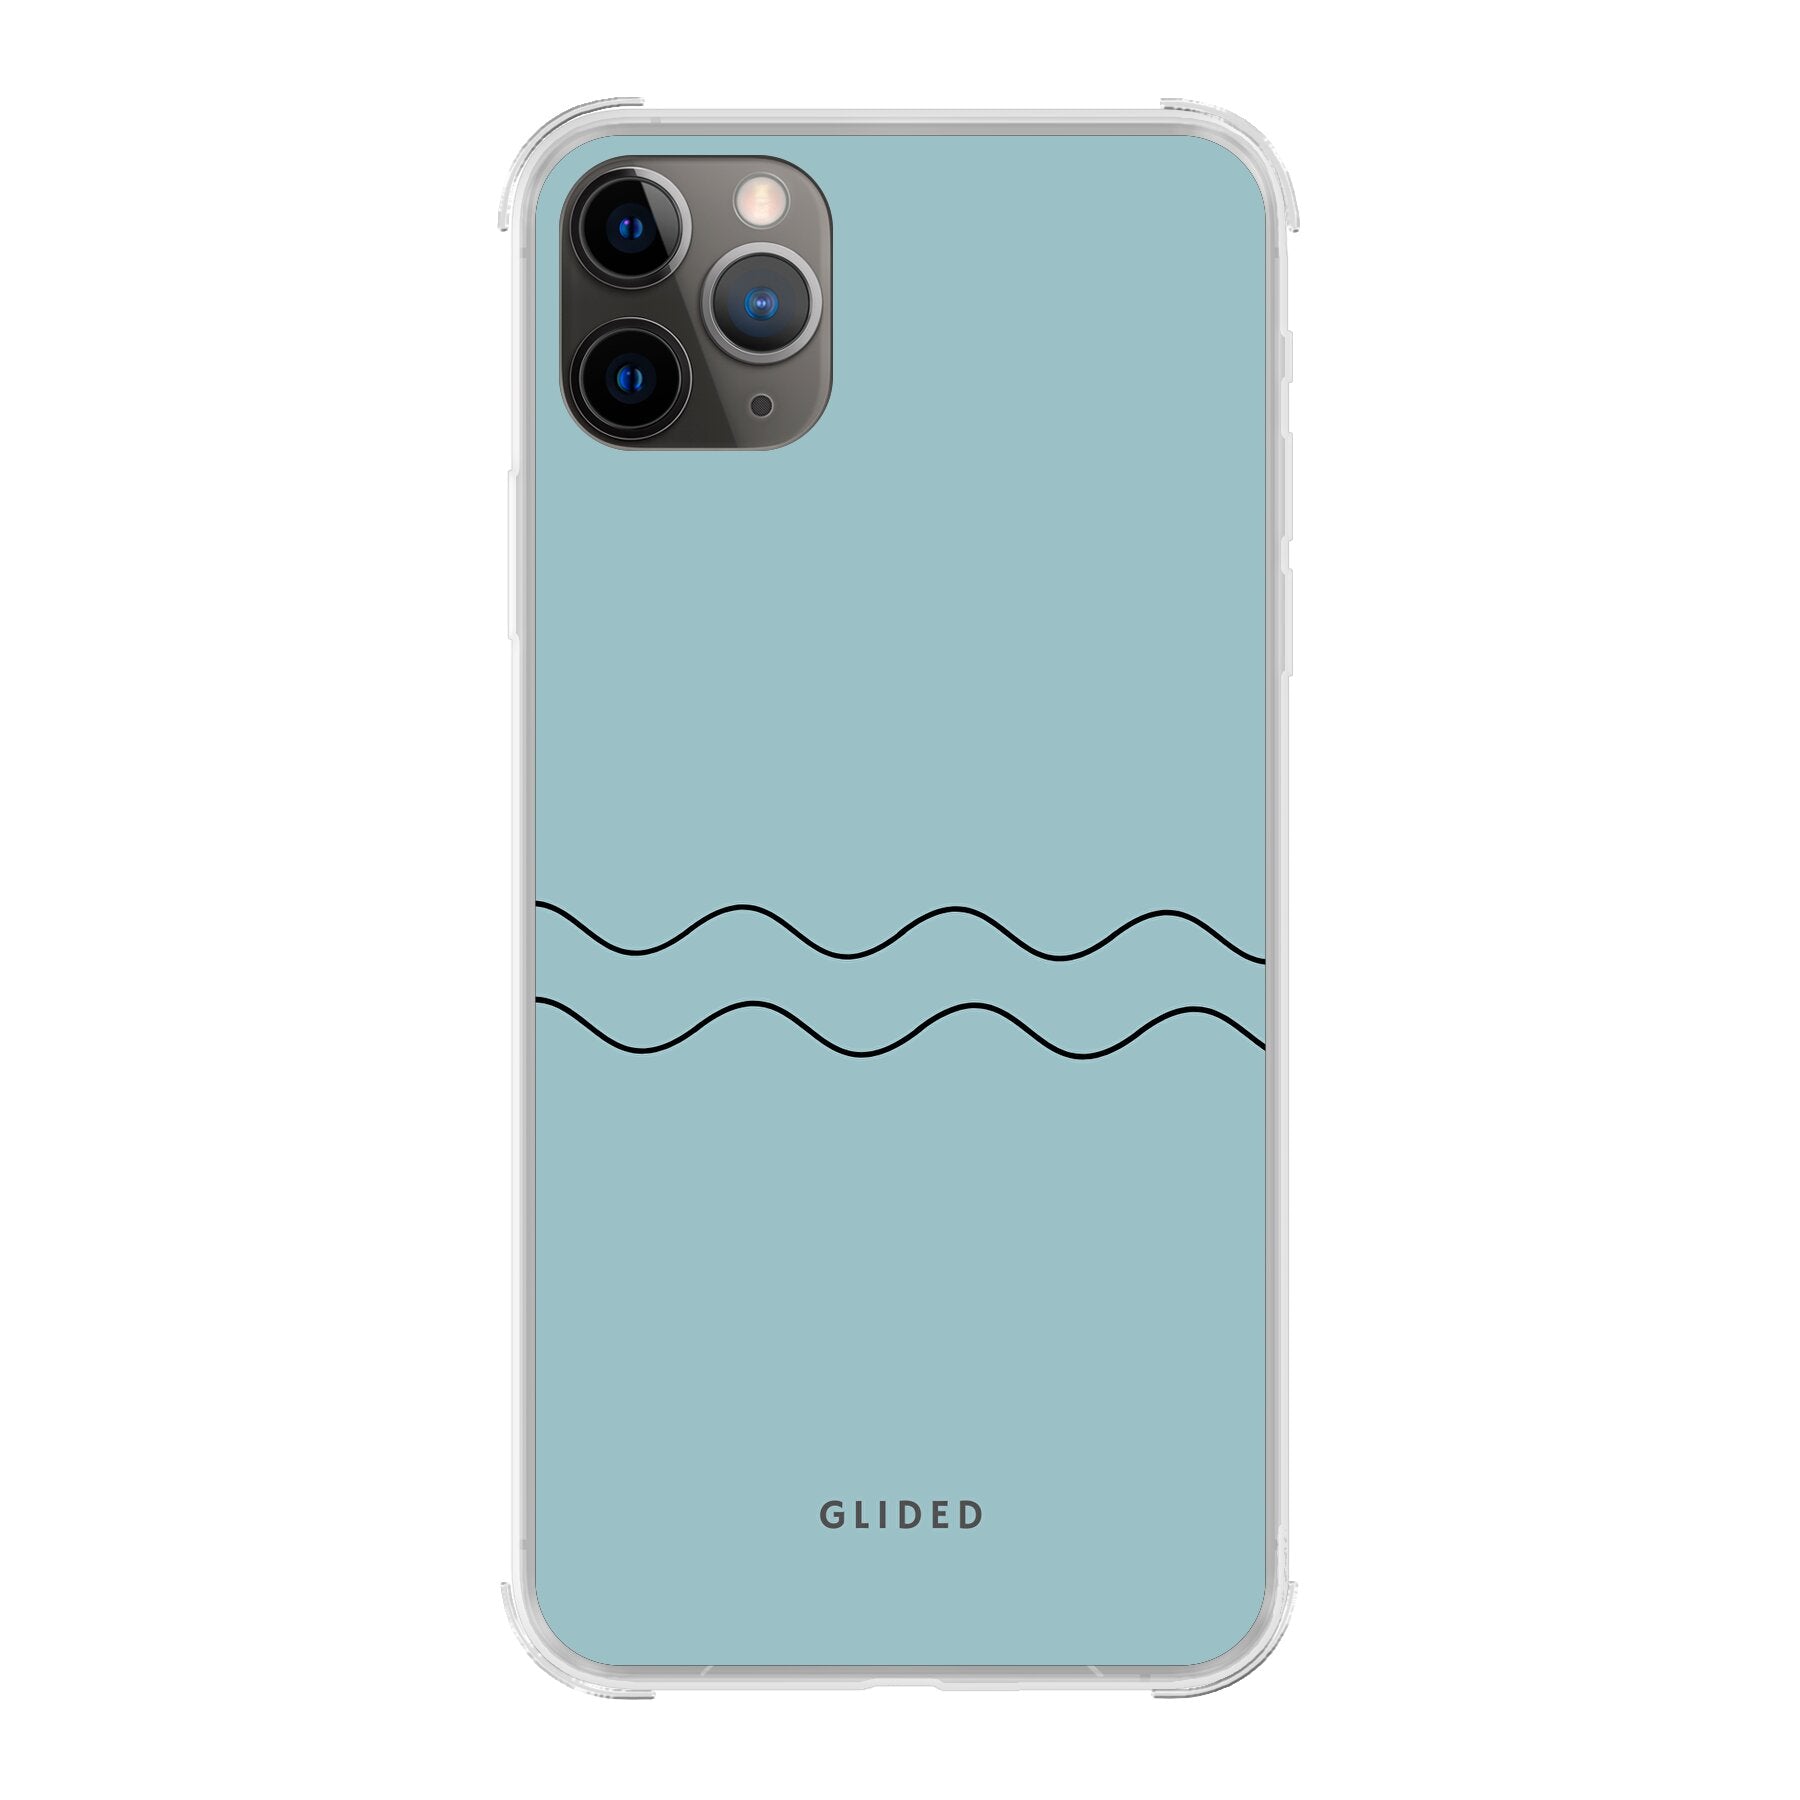 Horizona - iPhone 11 Pro Max Handyhülle Bumper case